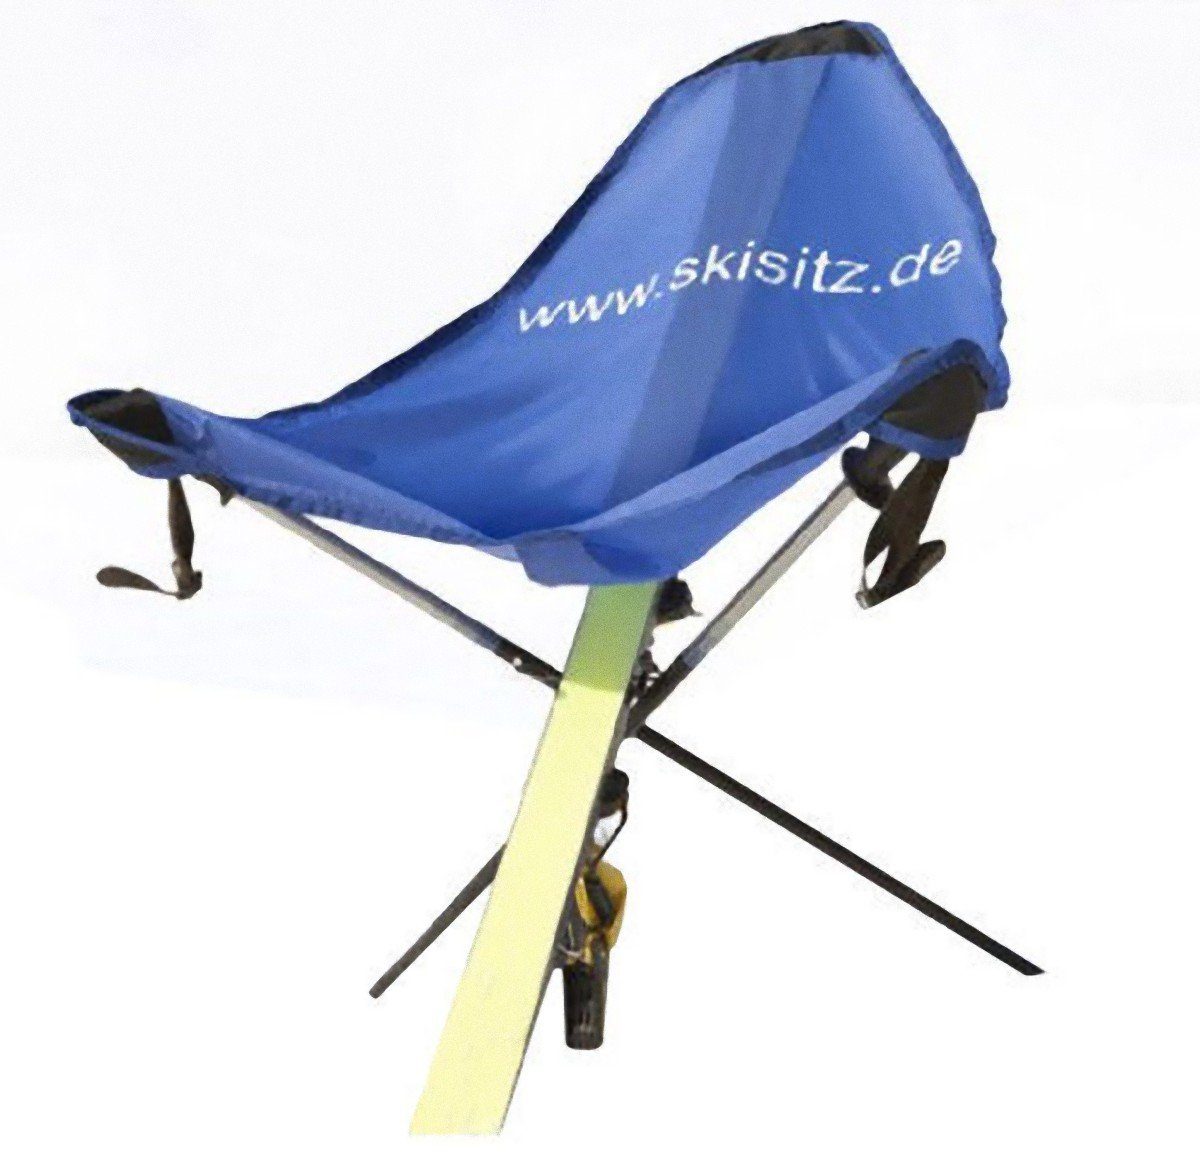 dynamic24 Ski, Skisitz Outdoor Sitz Stuhl Abfahrt Alpin Langlauf Wintersport